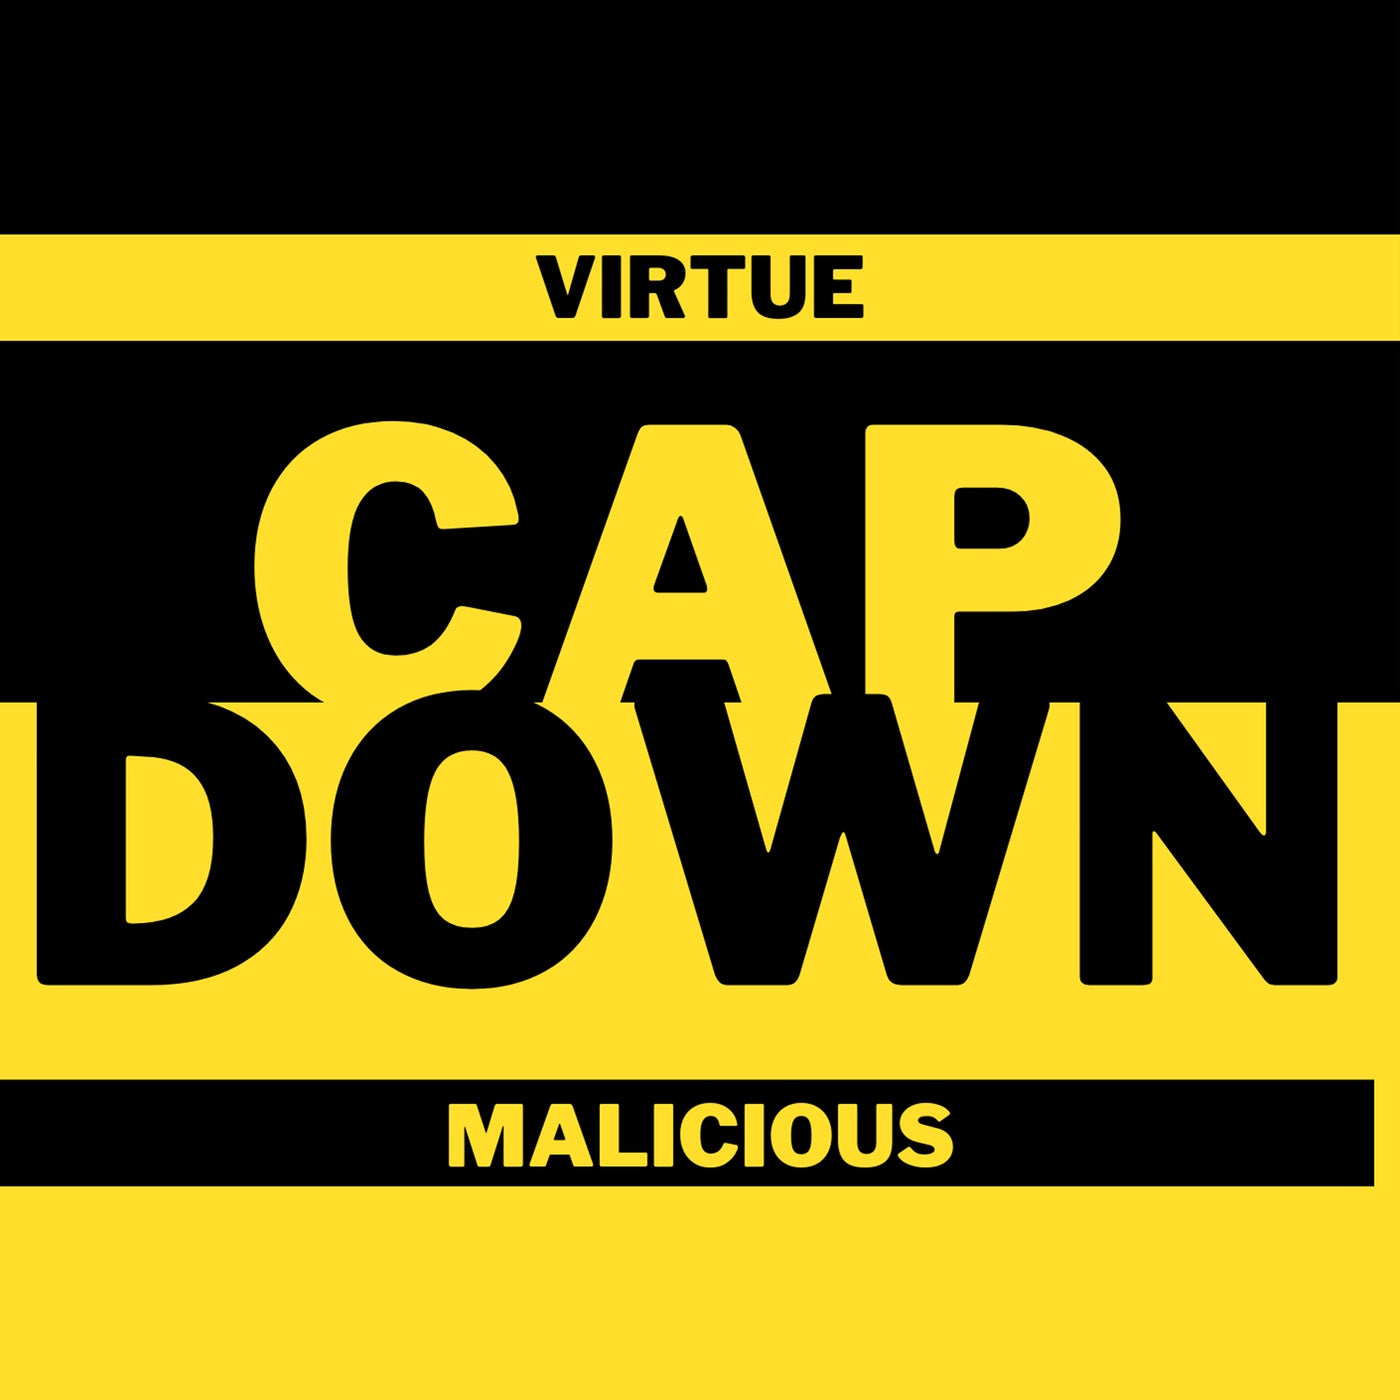 Cap Down